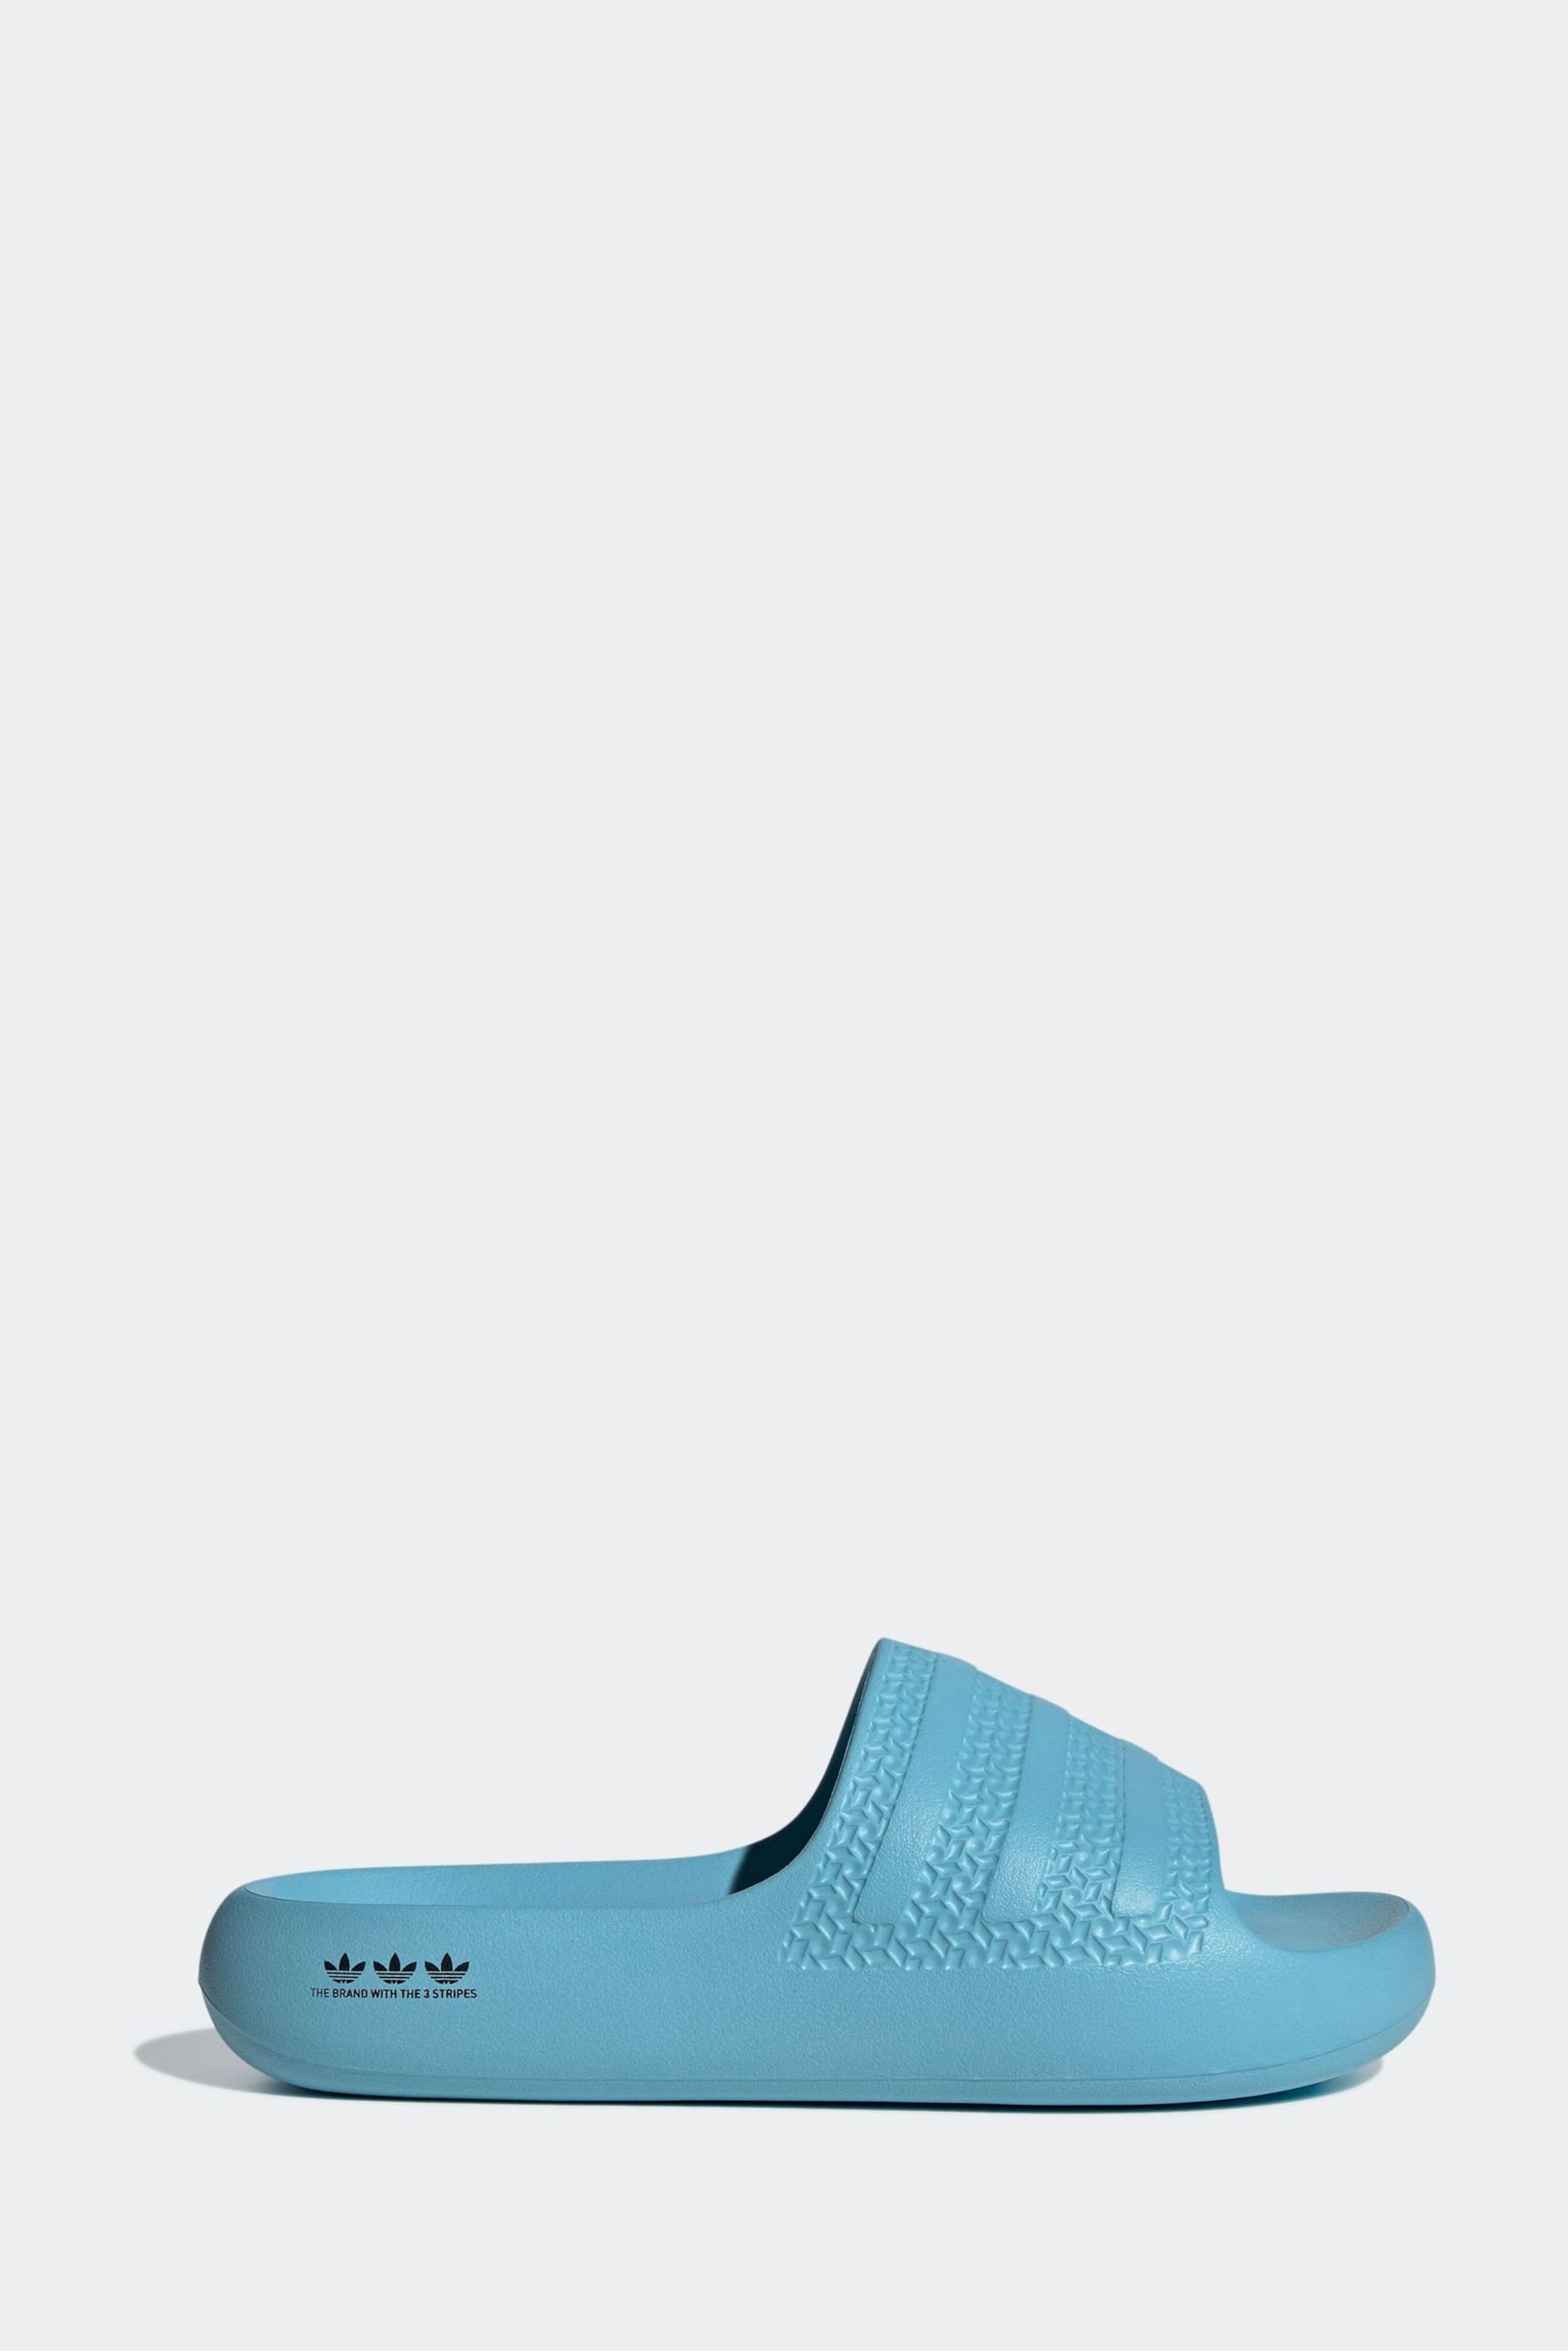 adidas Blue Adilette Ayoon Sandals - Image 1 of 8